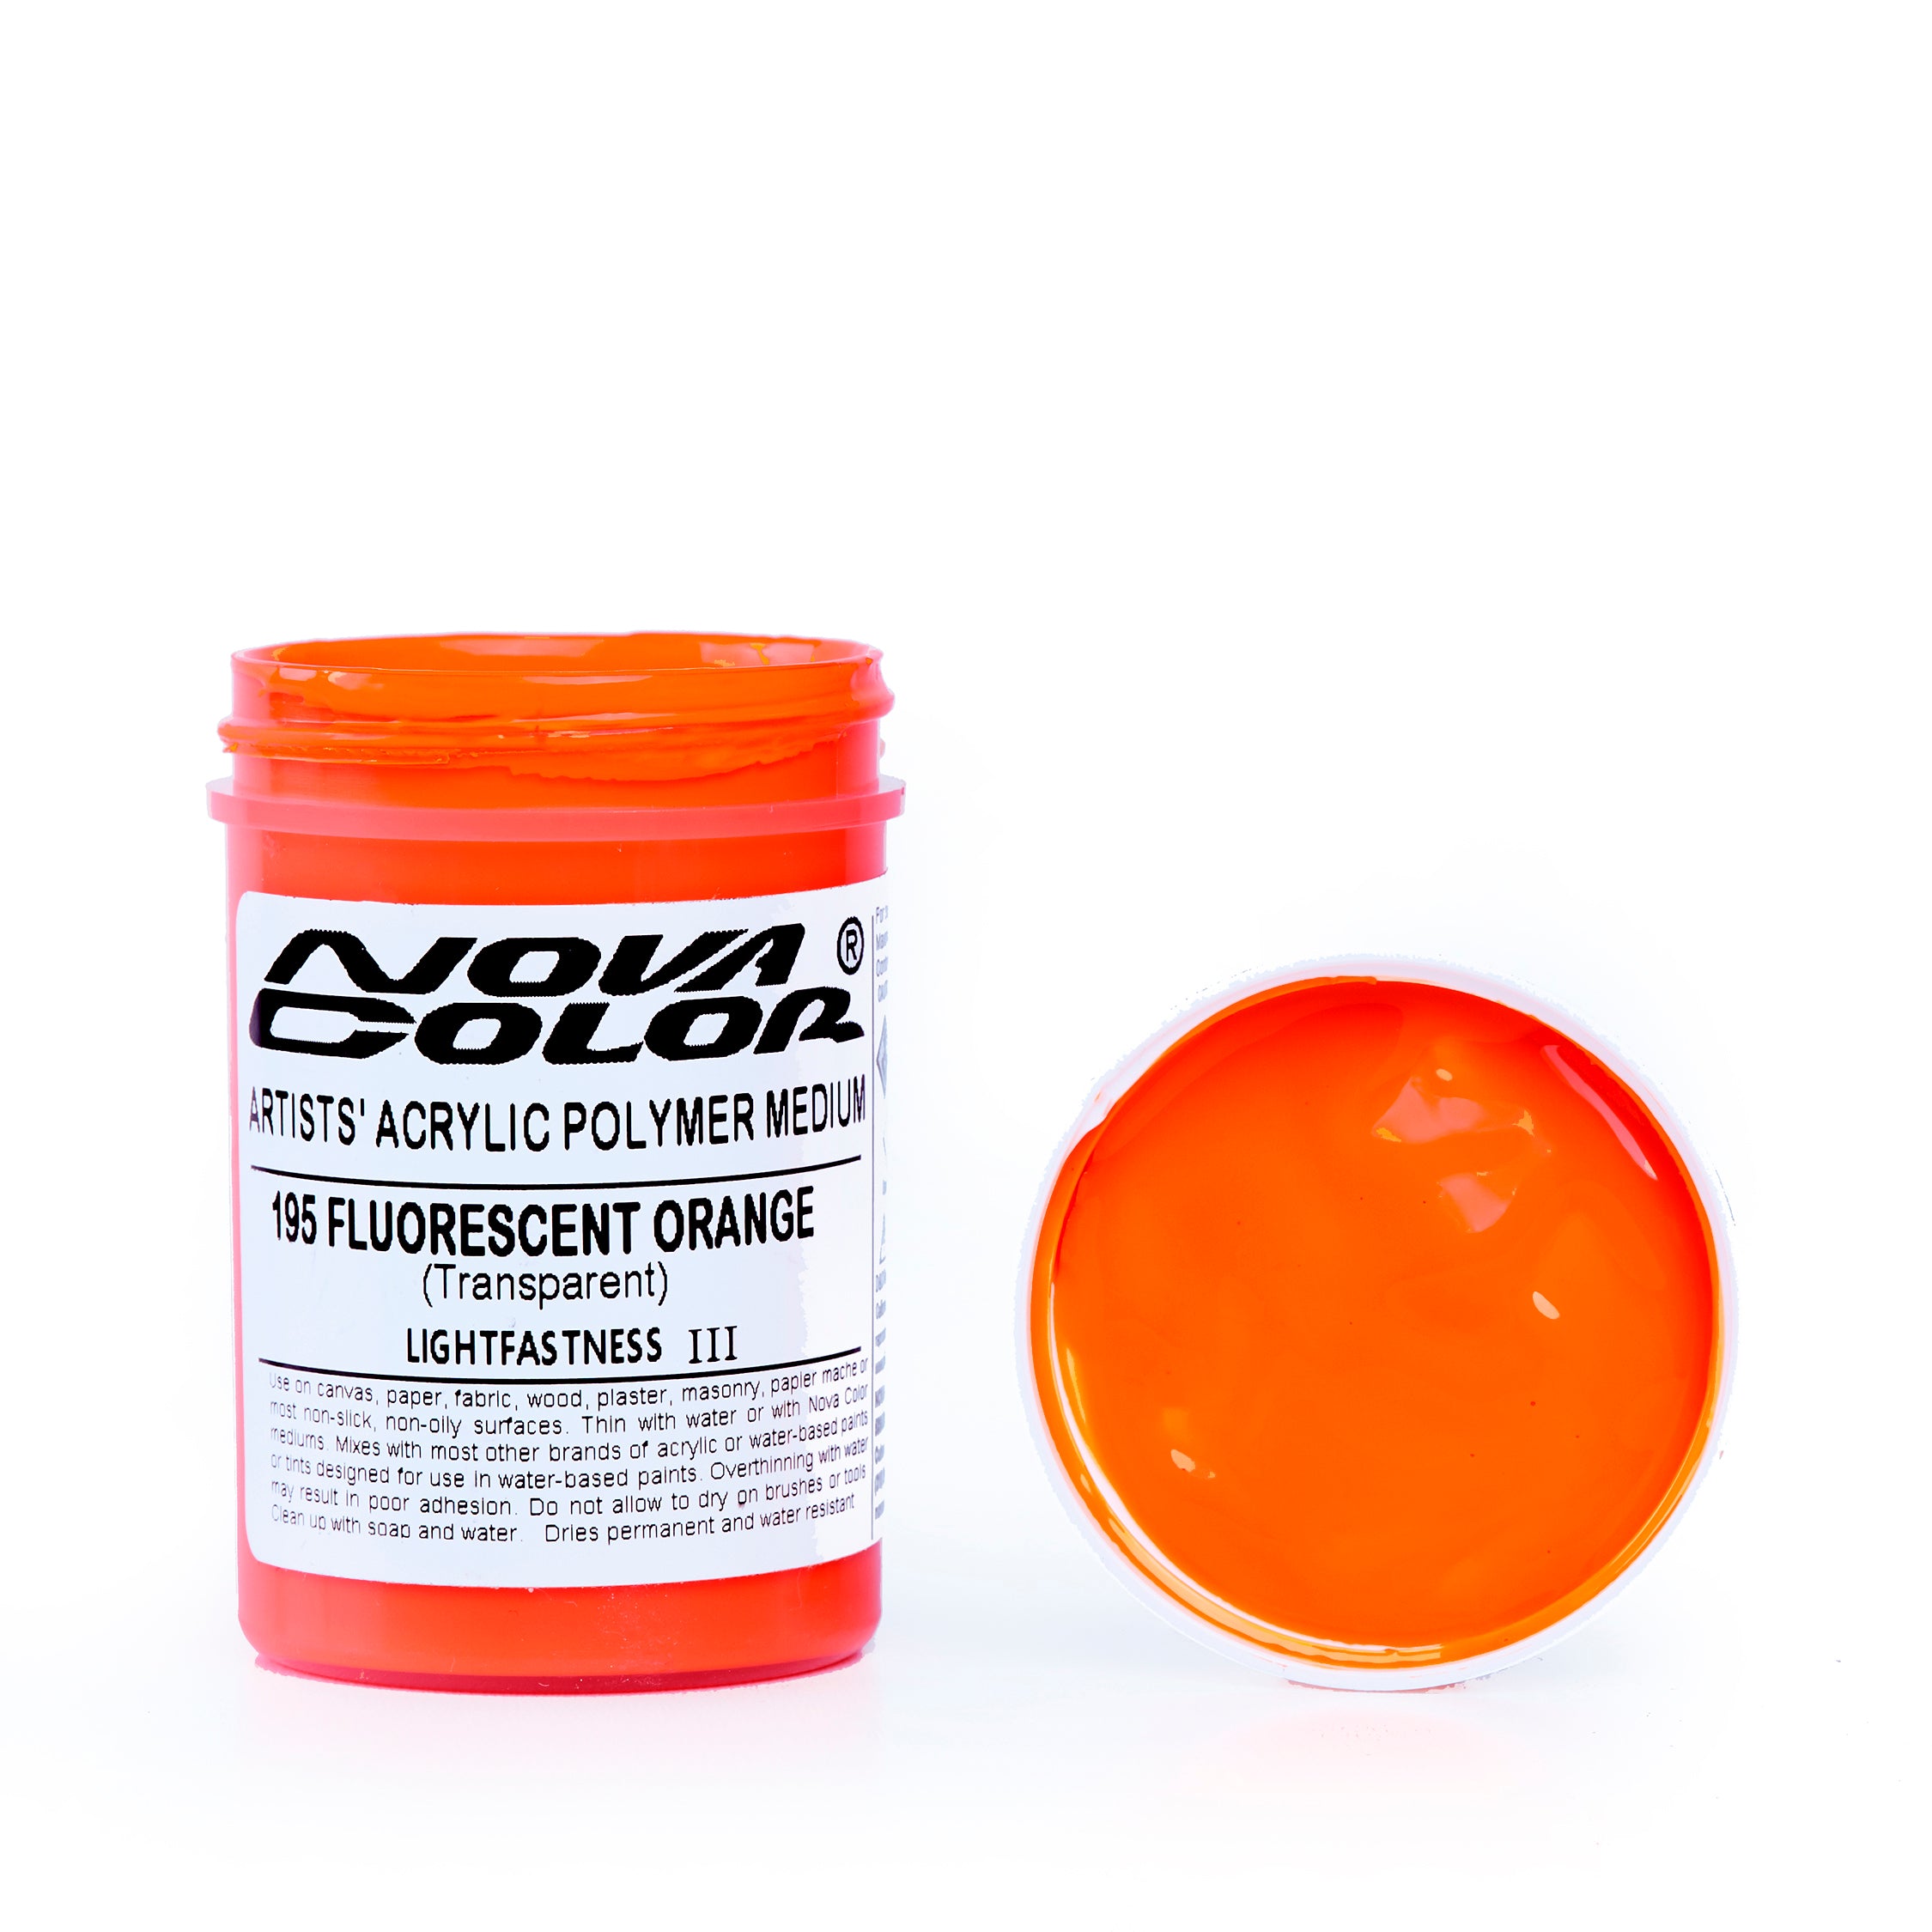 Buy #195 Fluorescent Orange - Lightfastness:, - Transparent Online